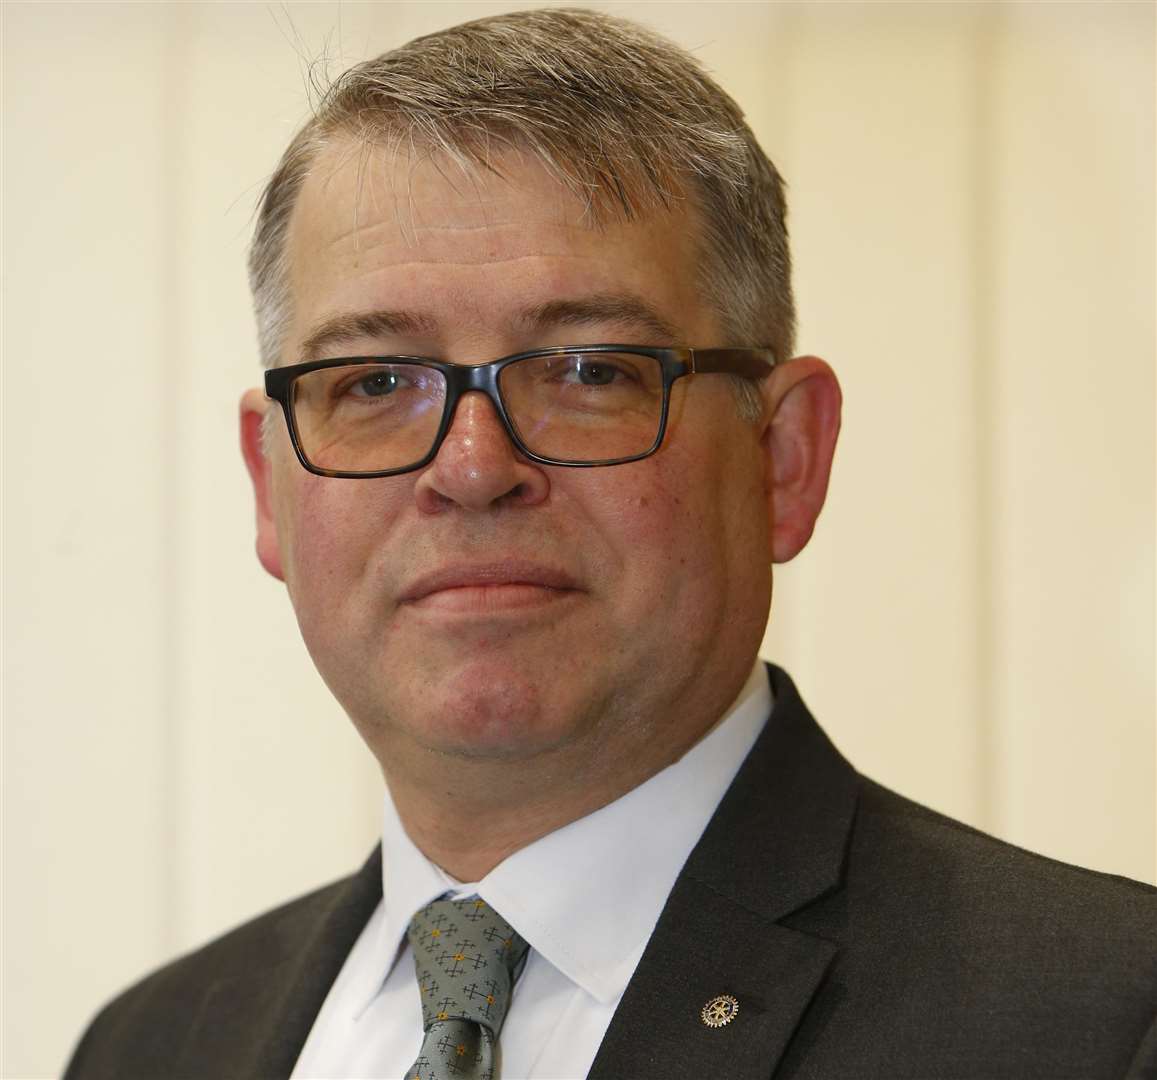 Council leader: Martin Cox